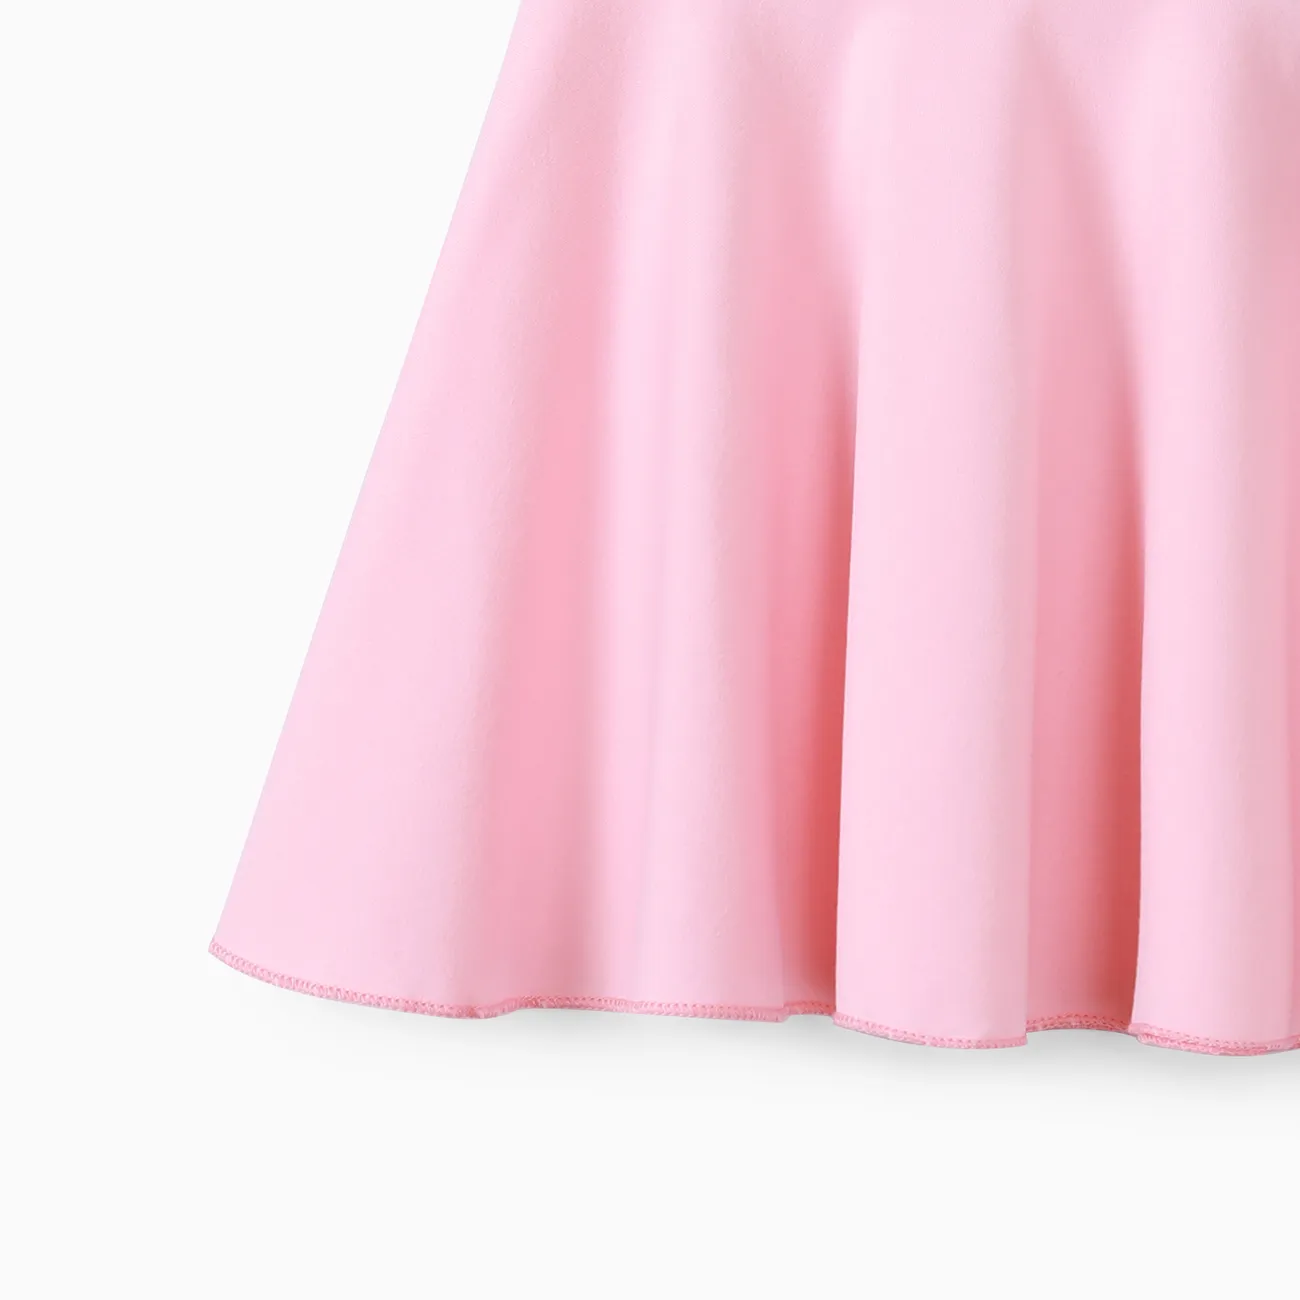 Kid Girl 2pcs Sweet Sleeveless Top and Floral Print Leggings Set Pink big image 1